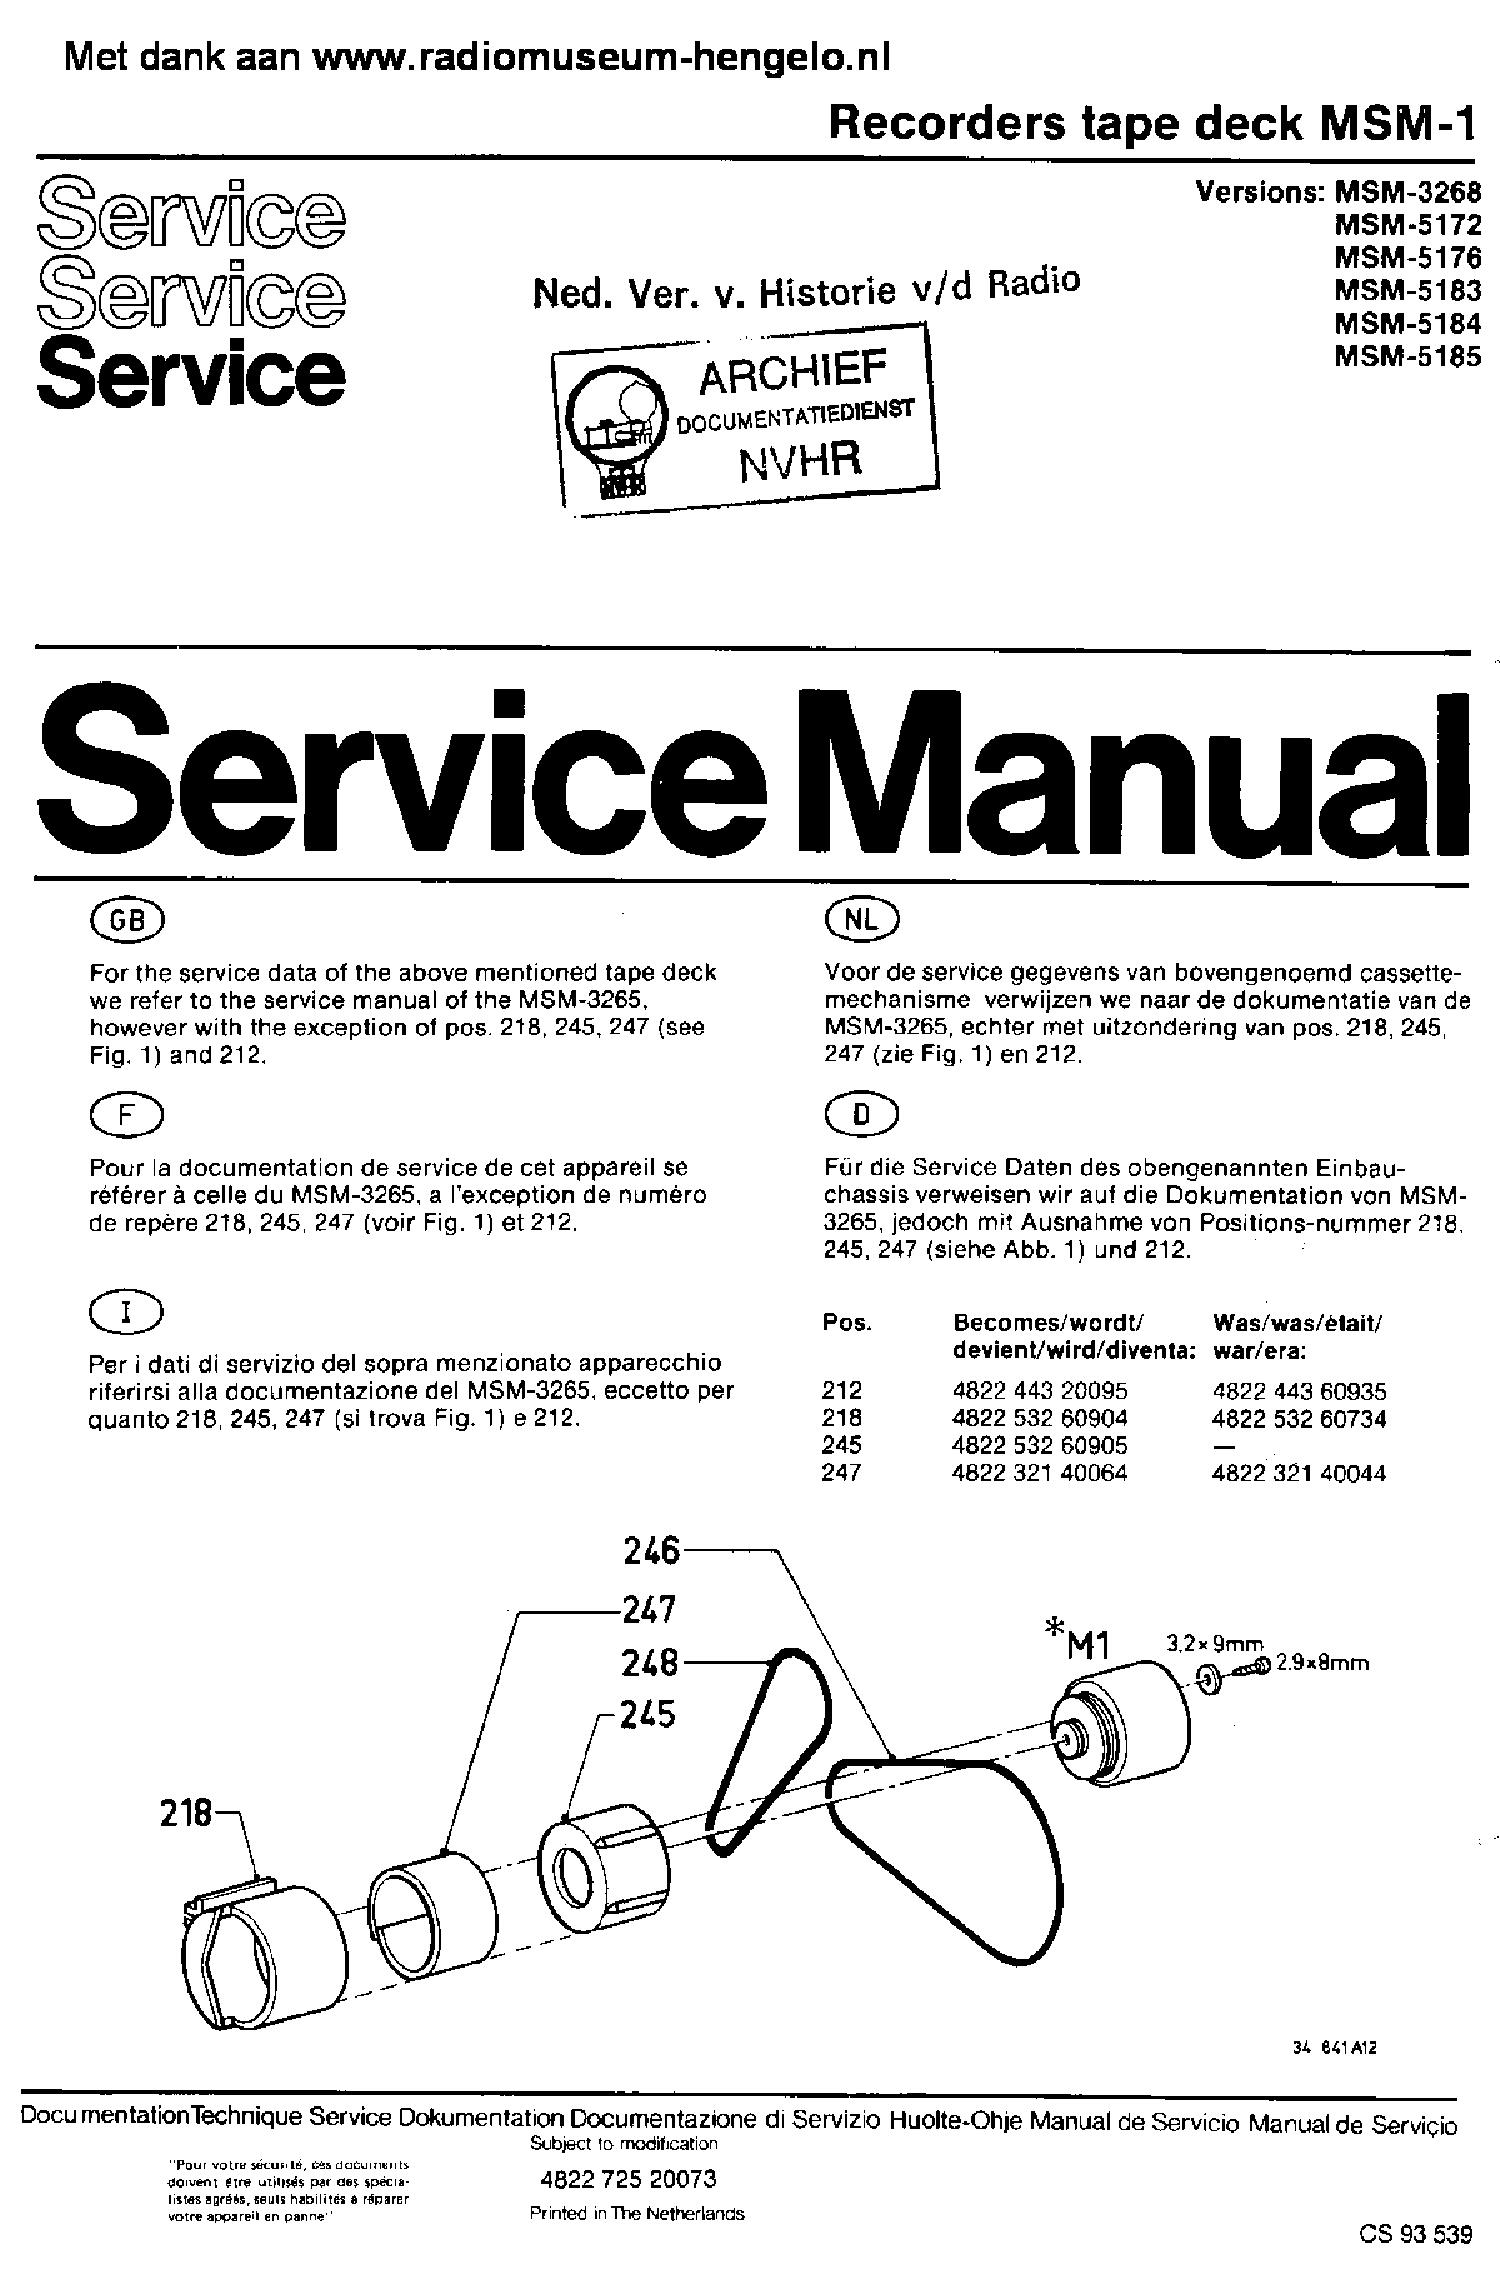 PHILIPS MSM-1 MSM-3265-66-67-68-71 MSM-5170-72-76-83-84-85 TAPE DECK SM service manual (1st page)